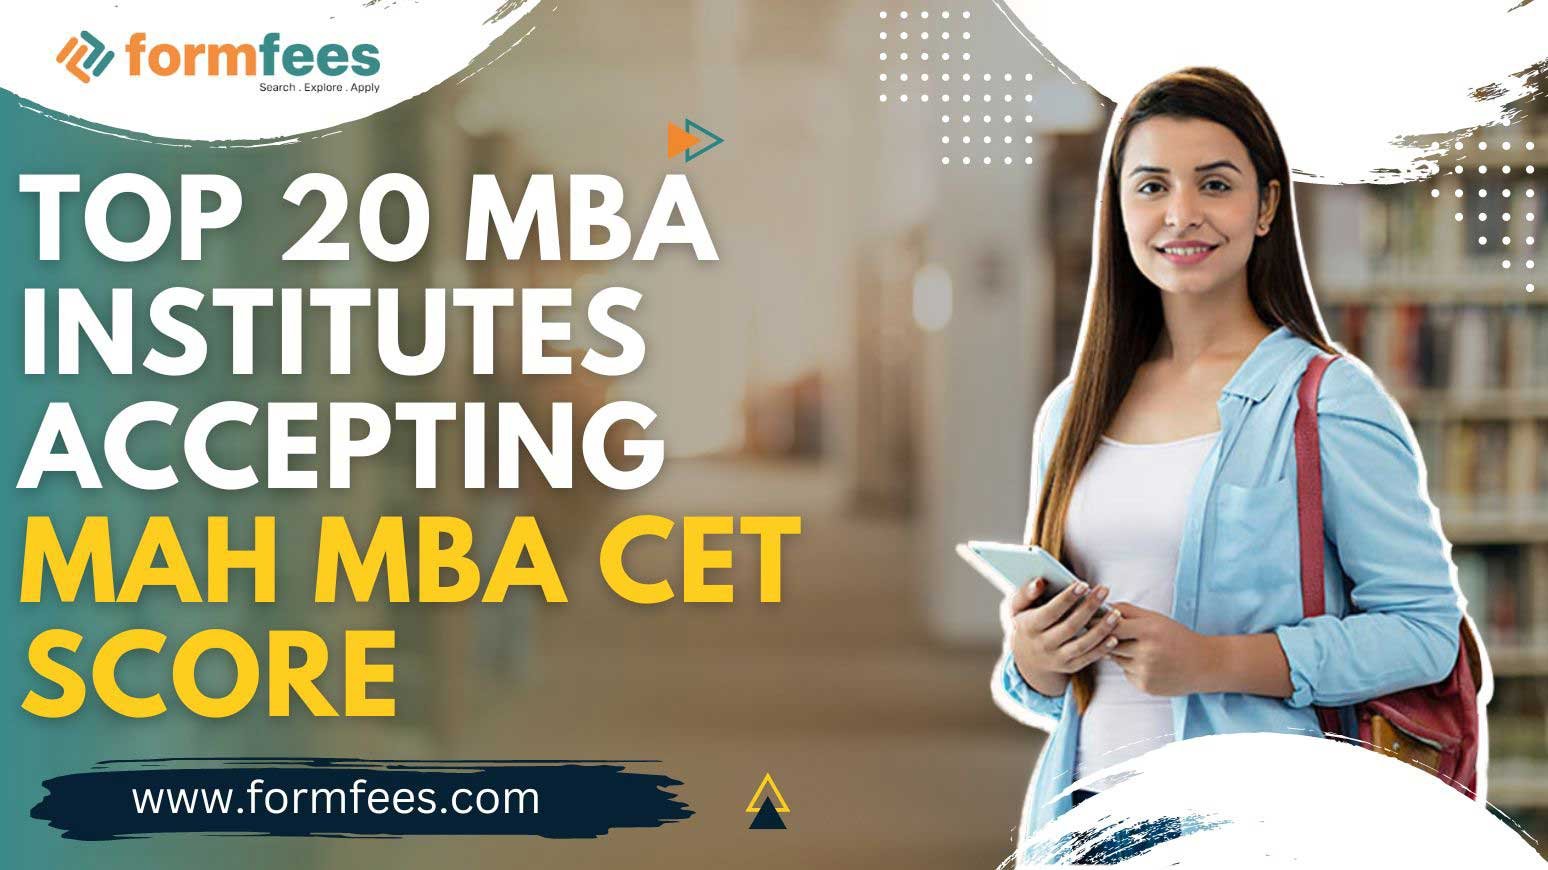 Top 20 MBA Institutes Accepting MAH MBA CET Score